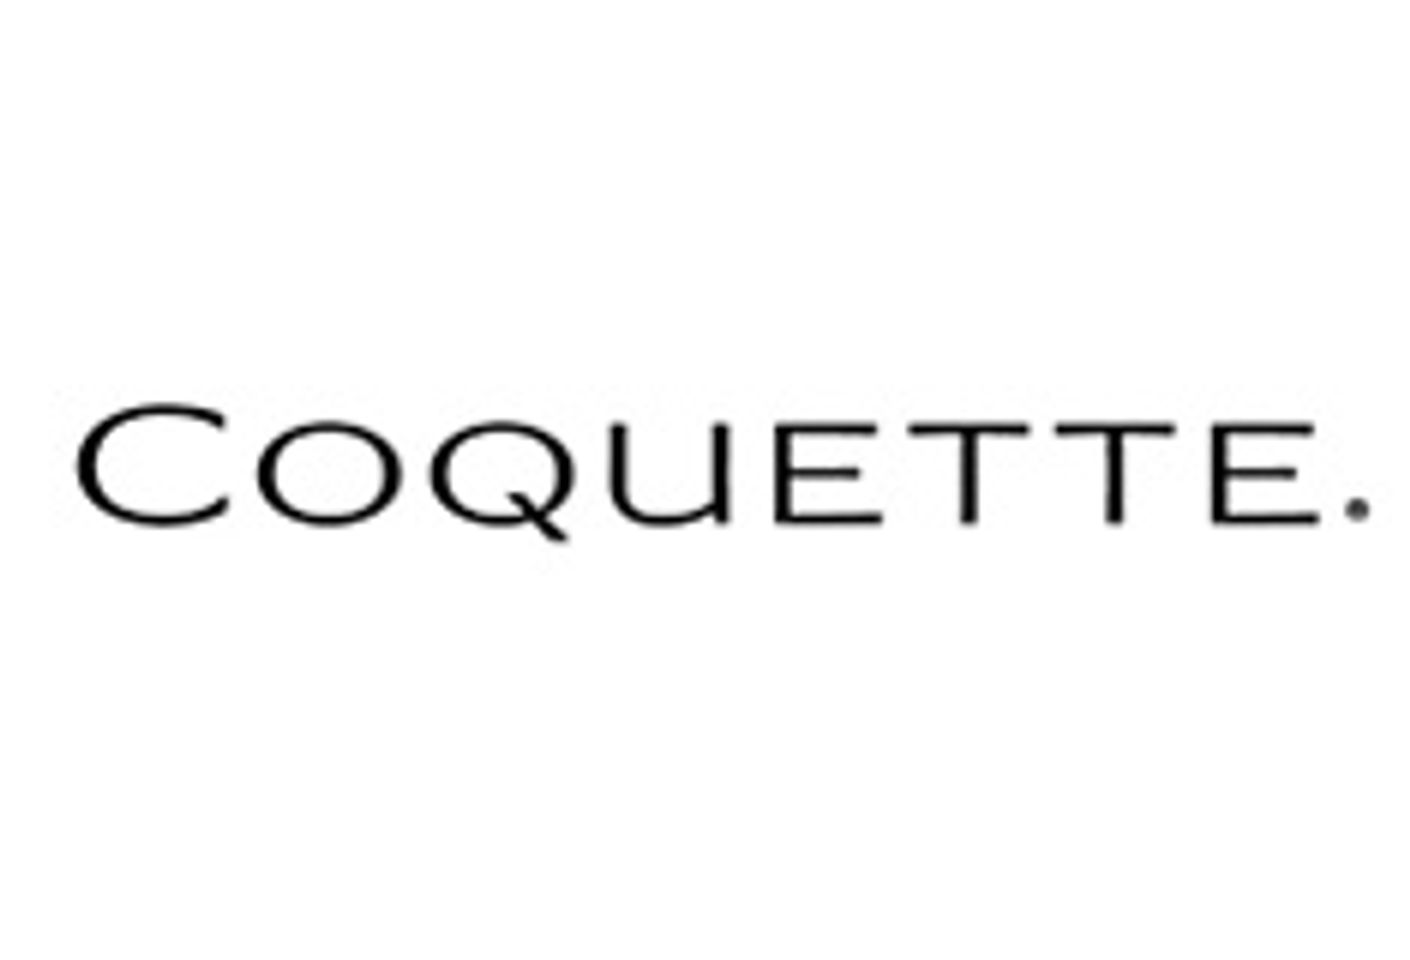 Coquette Makes Elegant, Simplistic Changes to Upgrade Website